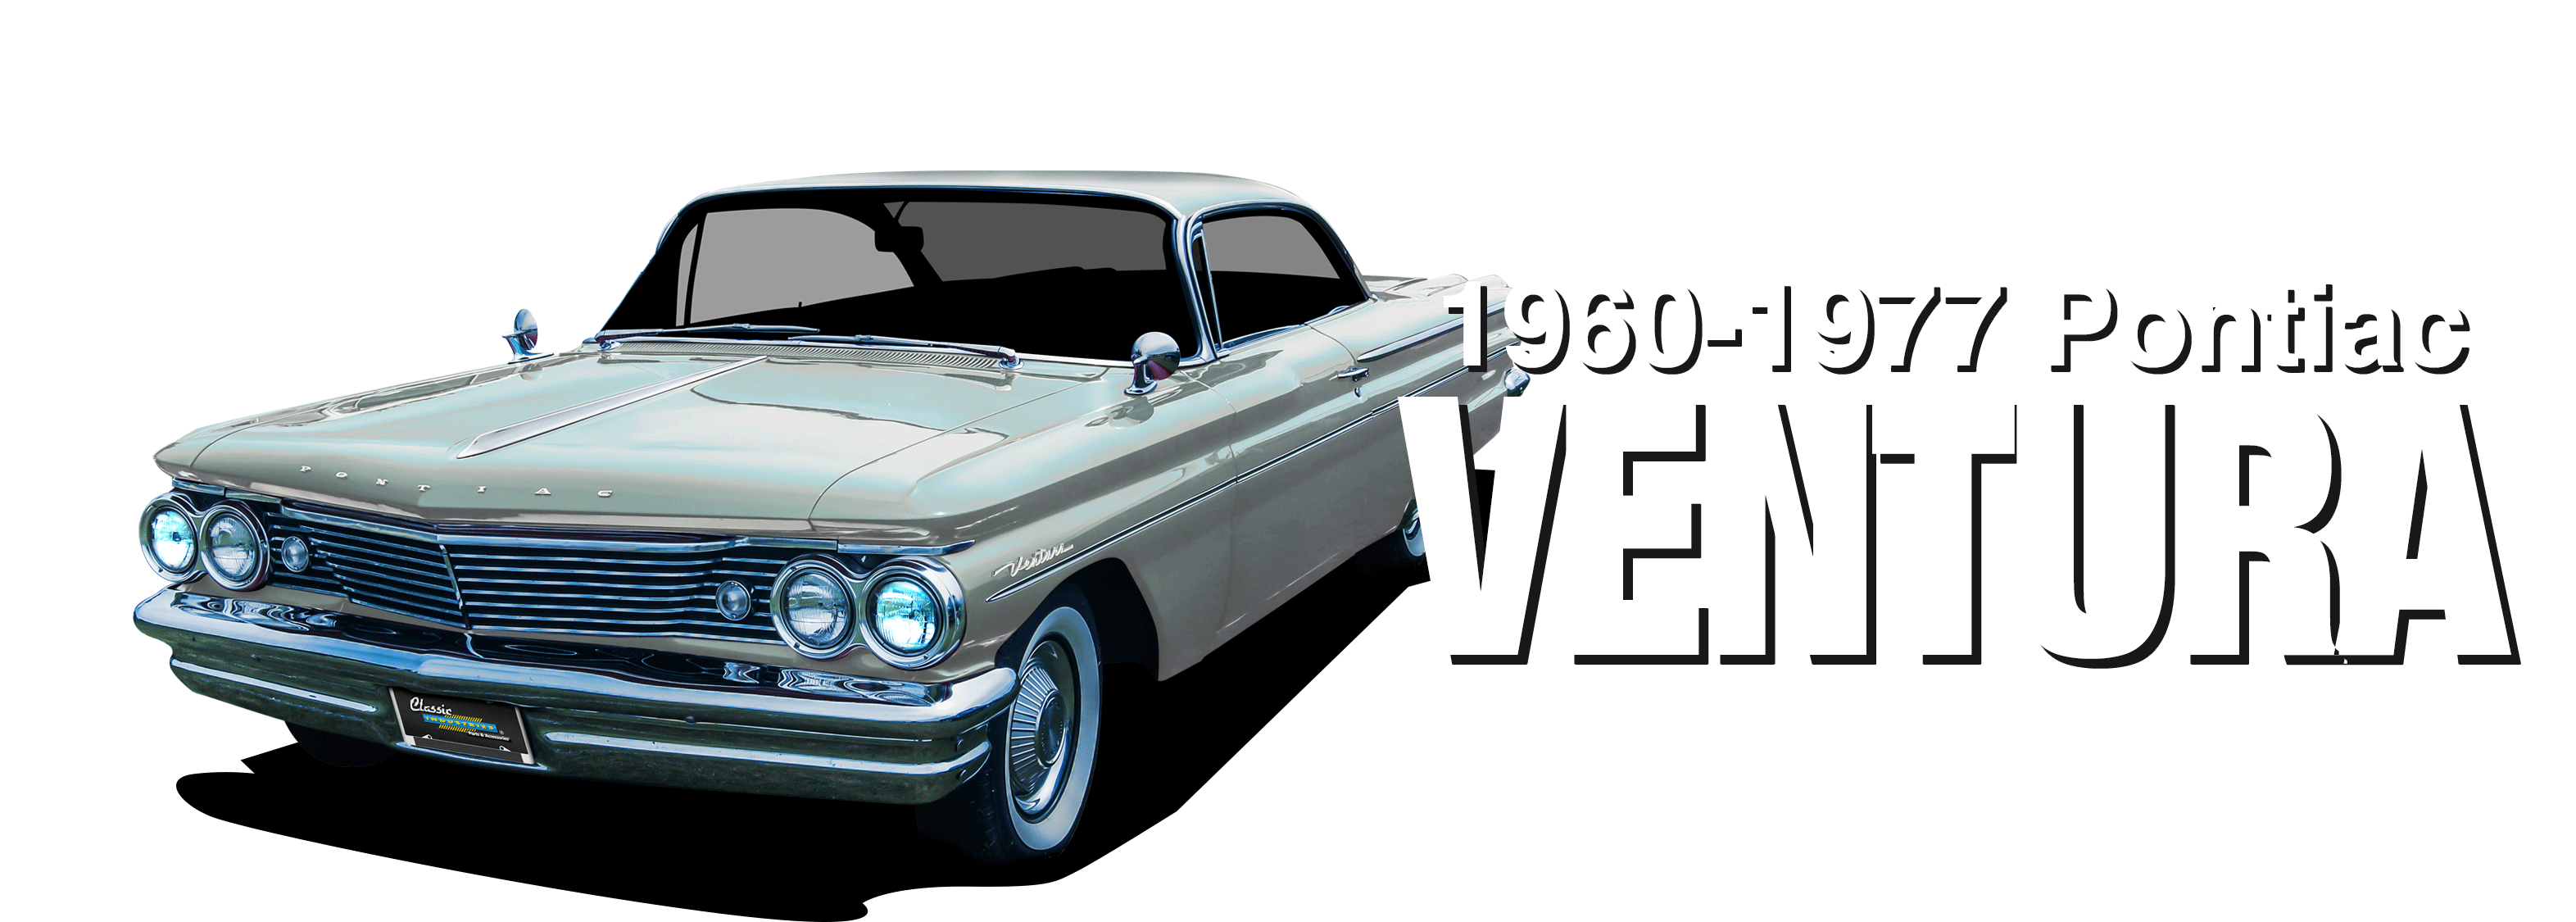 1960-1977 Pontiac Ventura